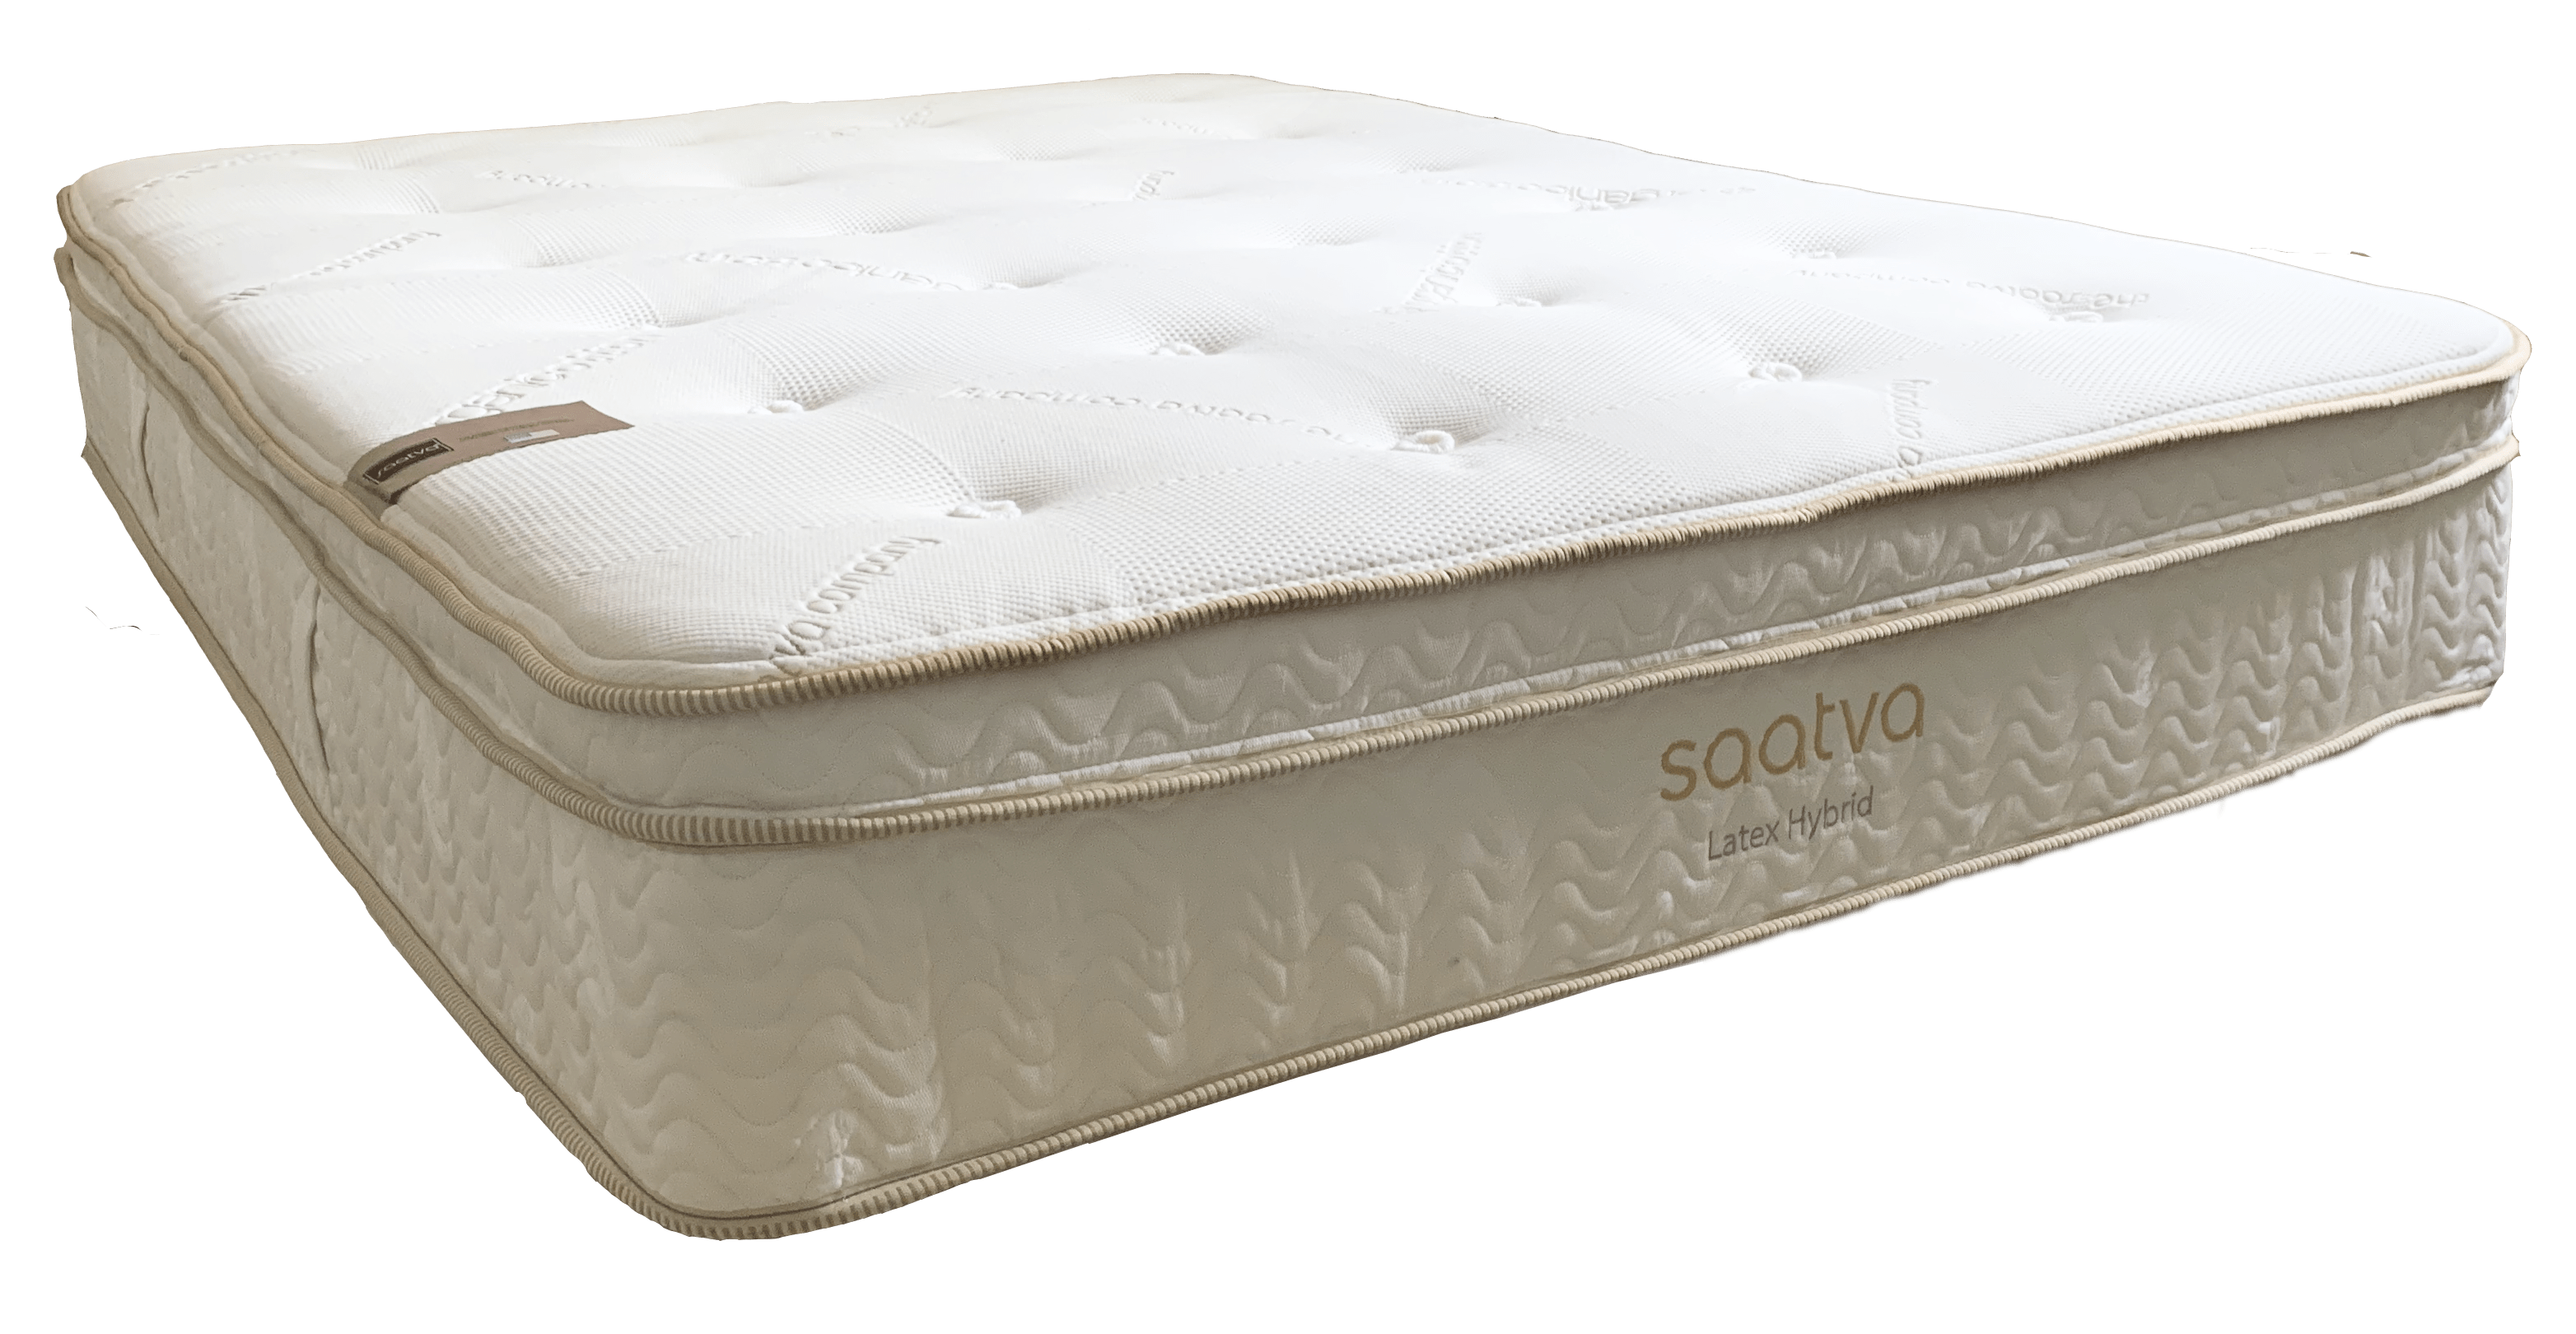 saatva classic mattress